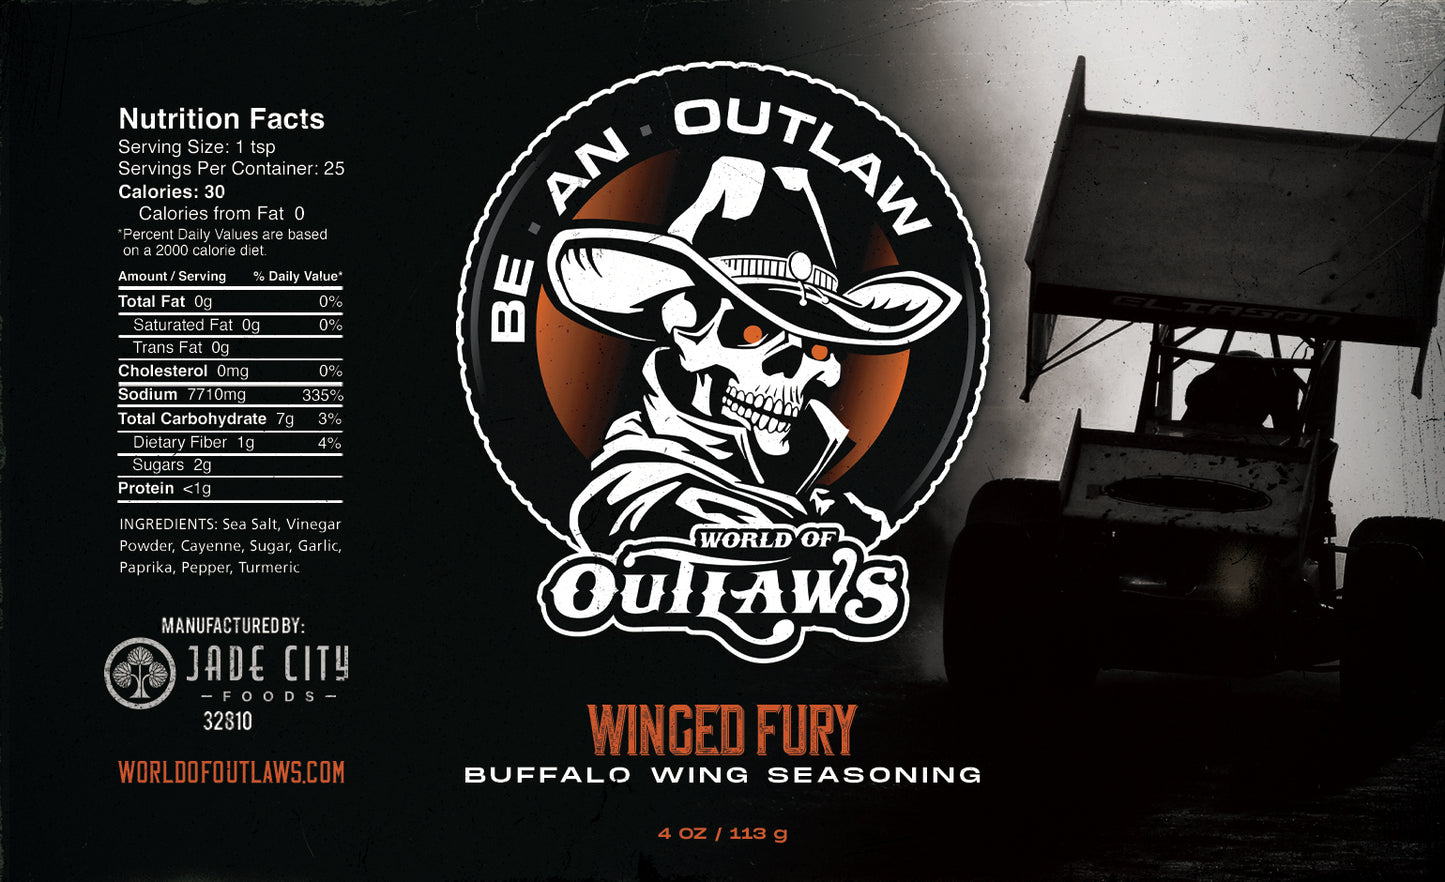 Winged Fury : Buffalo Wing Seasoning